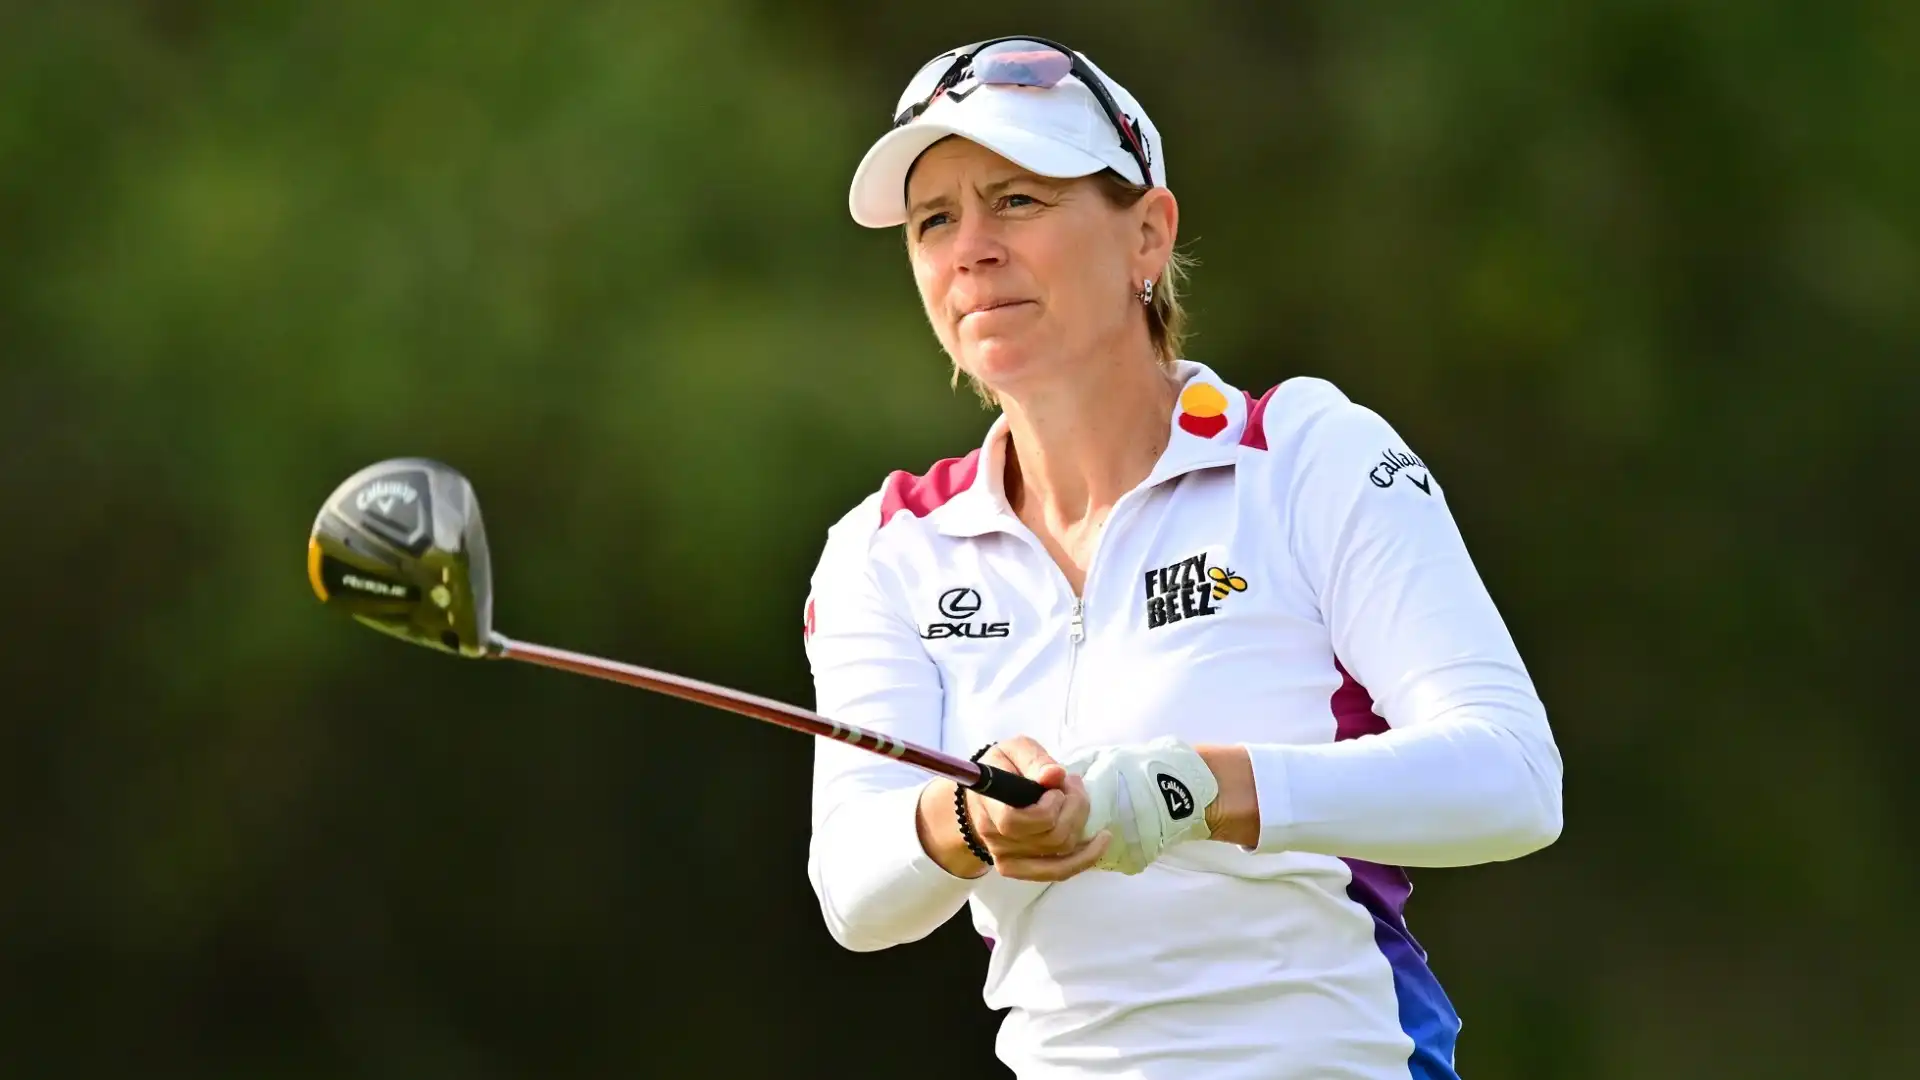 Annika Sorenstam (Golf, Svezia): patrimonio netto stimato 40 milioni di dollari.  Ha vinto tre Us Women's Open